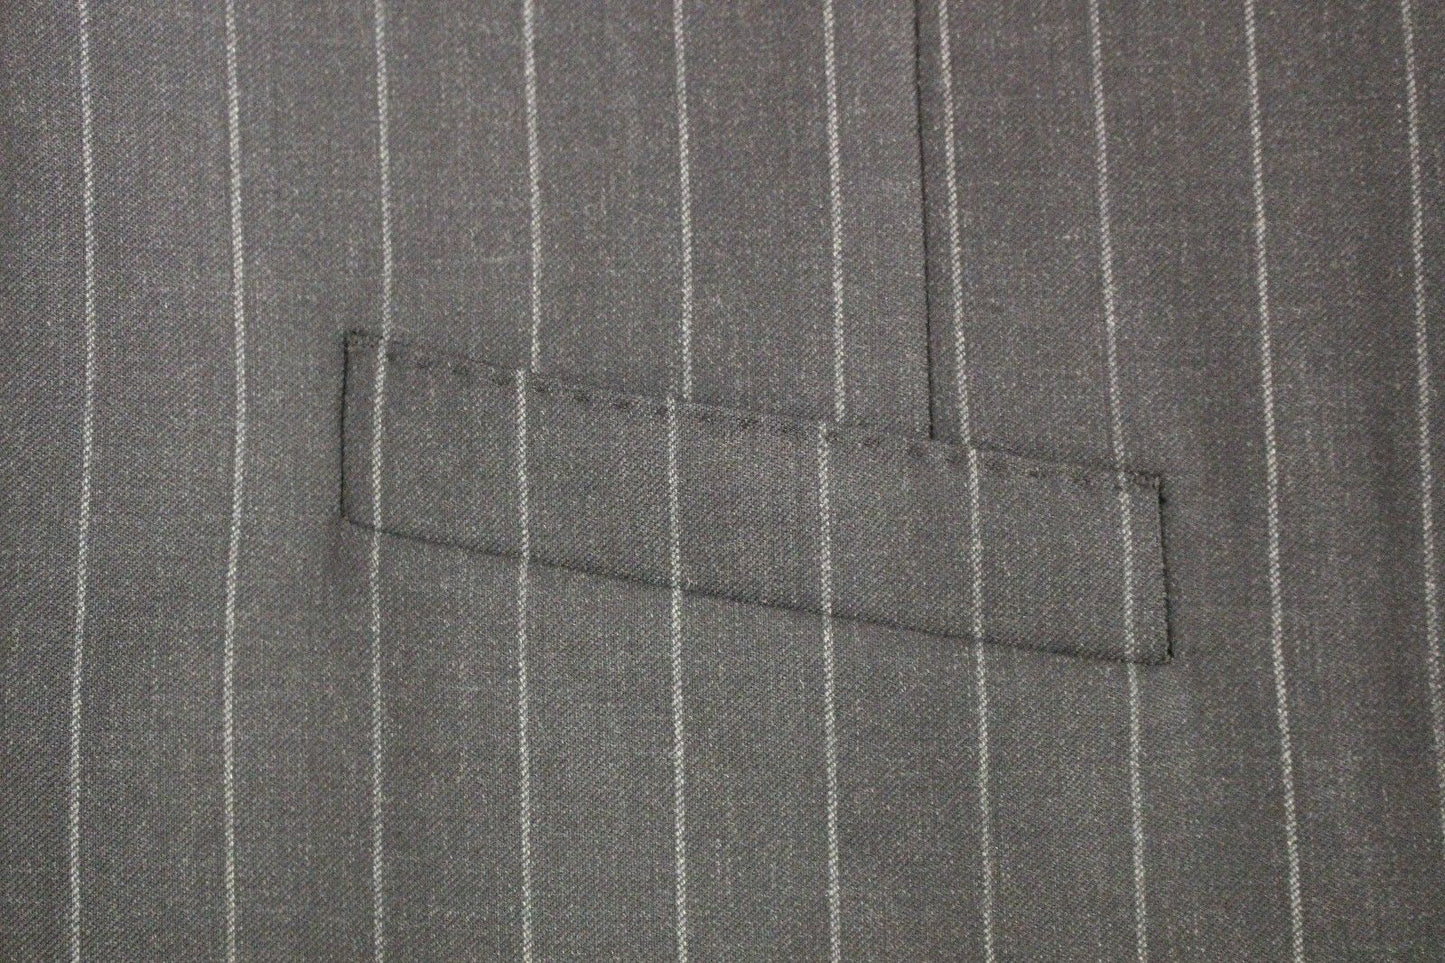 Elegant Gray Striped Wool Vest